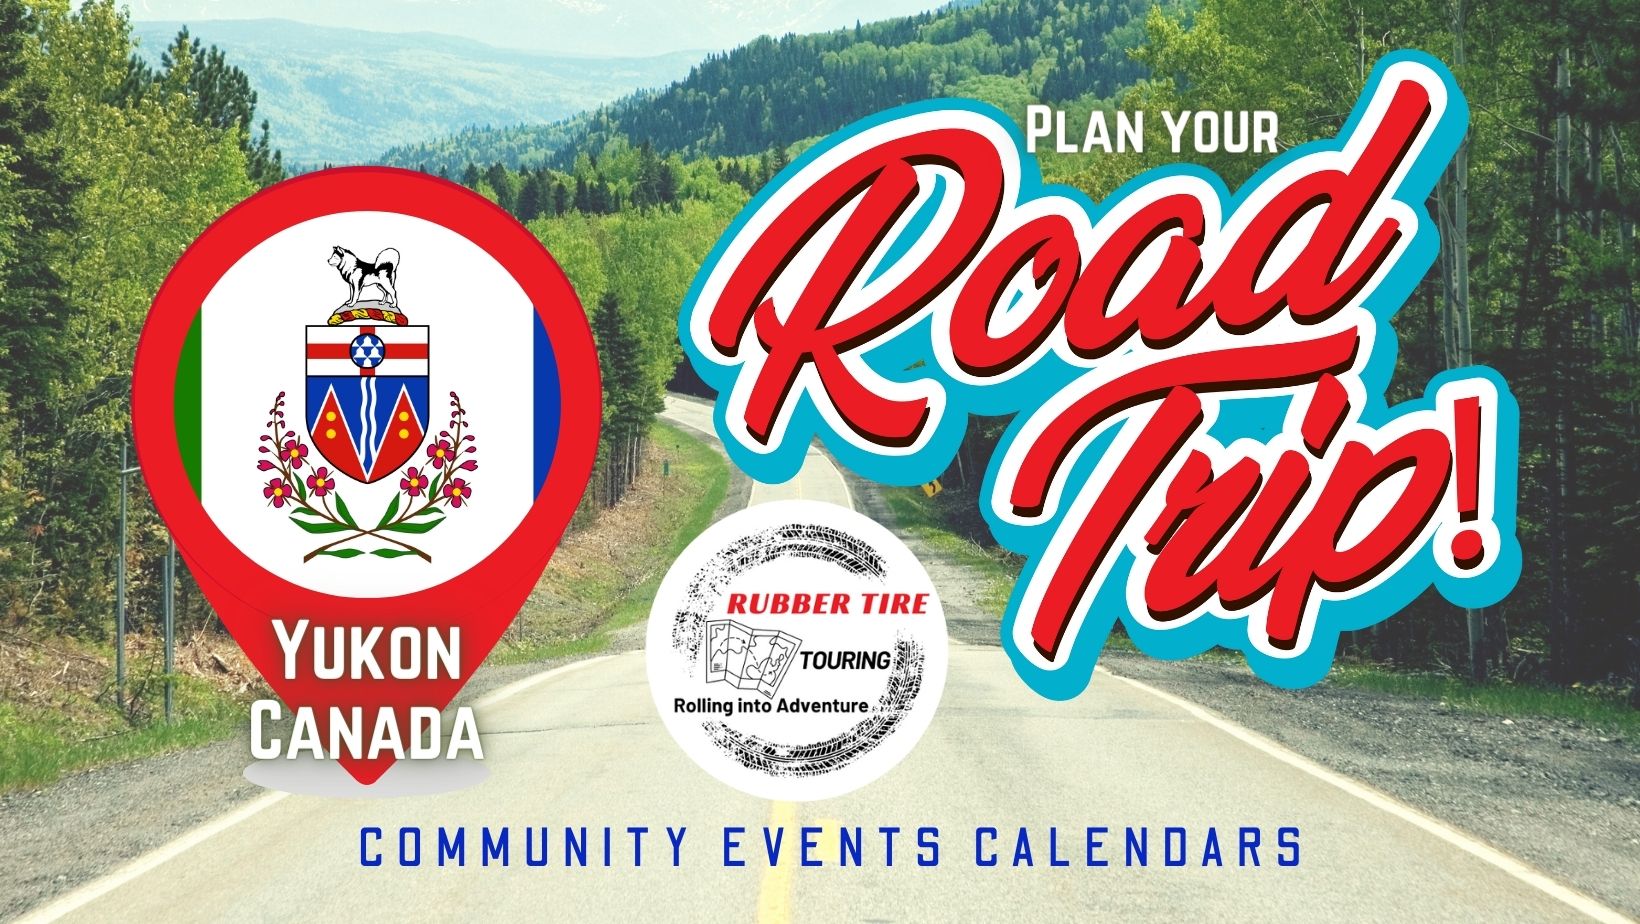 YT Events Calendar - Plan your road trip!